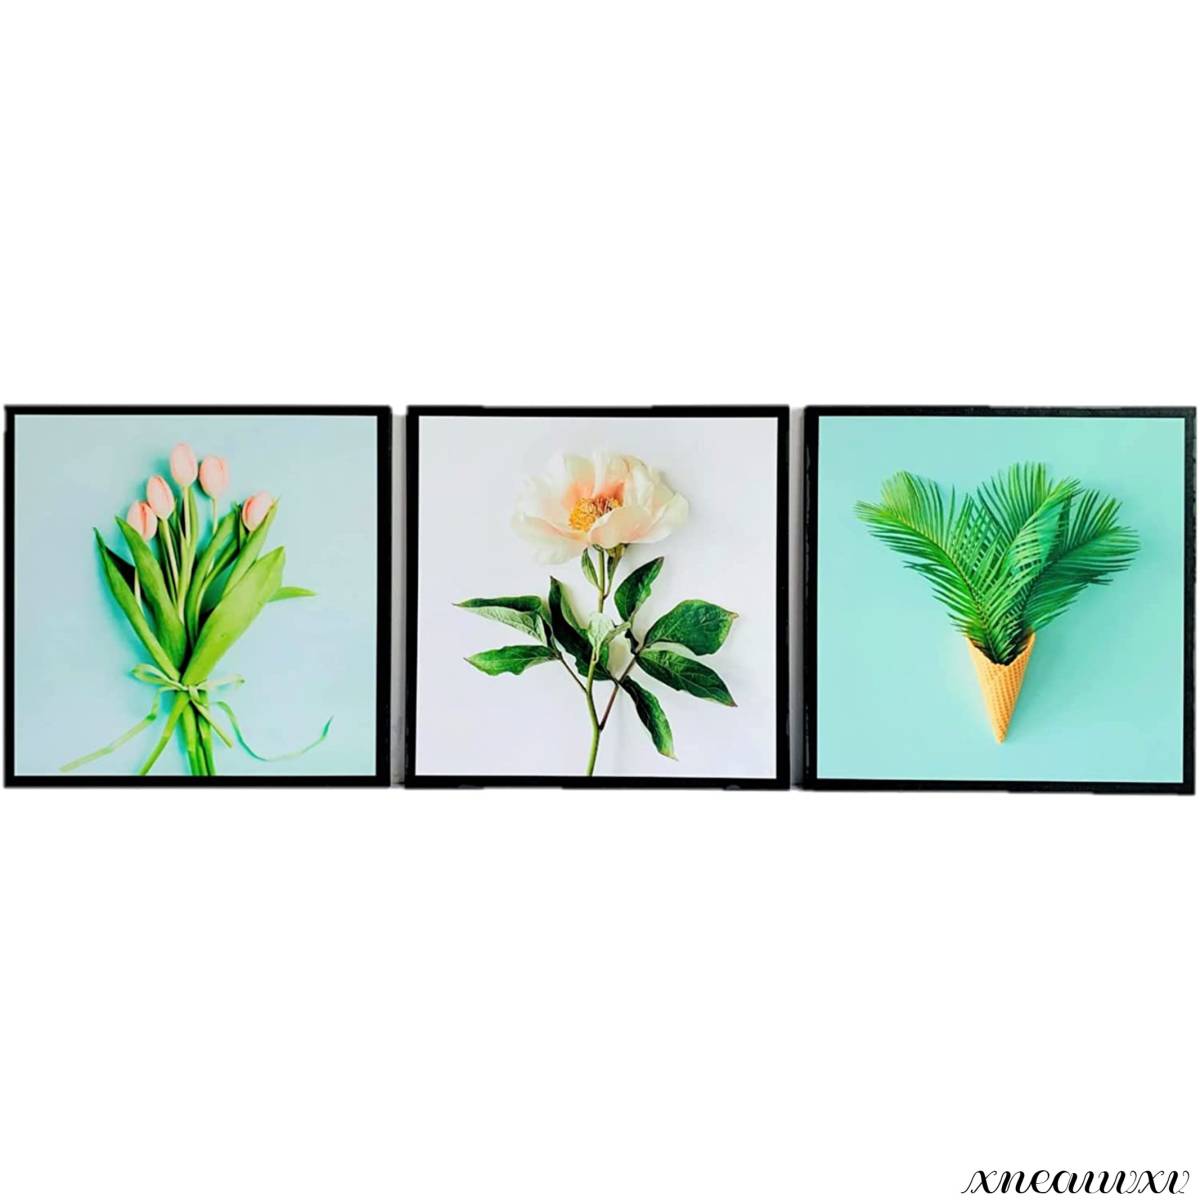 स्टाइलिश 3-पैनल कला पैनल, पुष्प, पौधे, आंतरिक भाग, दीवार पर लटकने वाले, कमरे की सजावट, प्रकृति, फूल, कैनवास, चित्रकारी, स्टाइलिश, दीवार कला, कला, रंगीन, कलाकृति, चित्रकारी, ग्राफ़िक